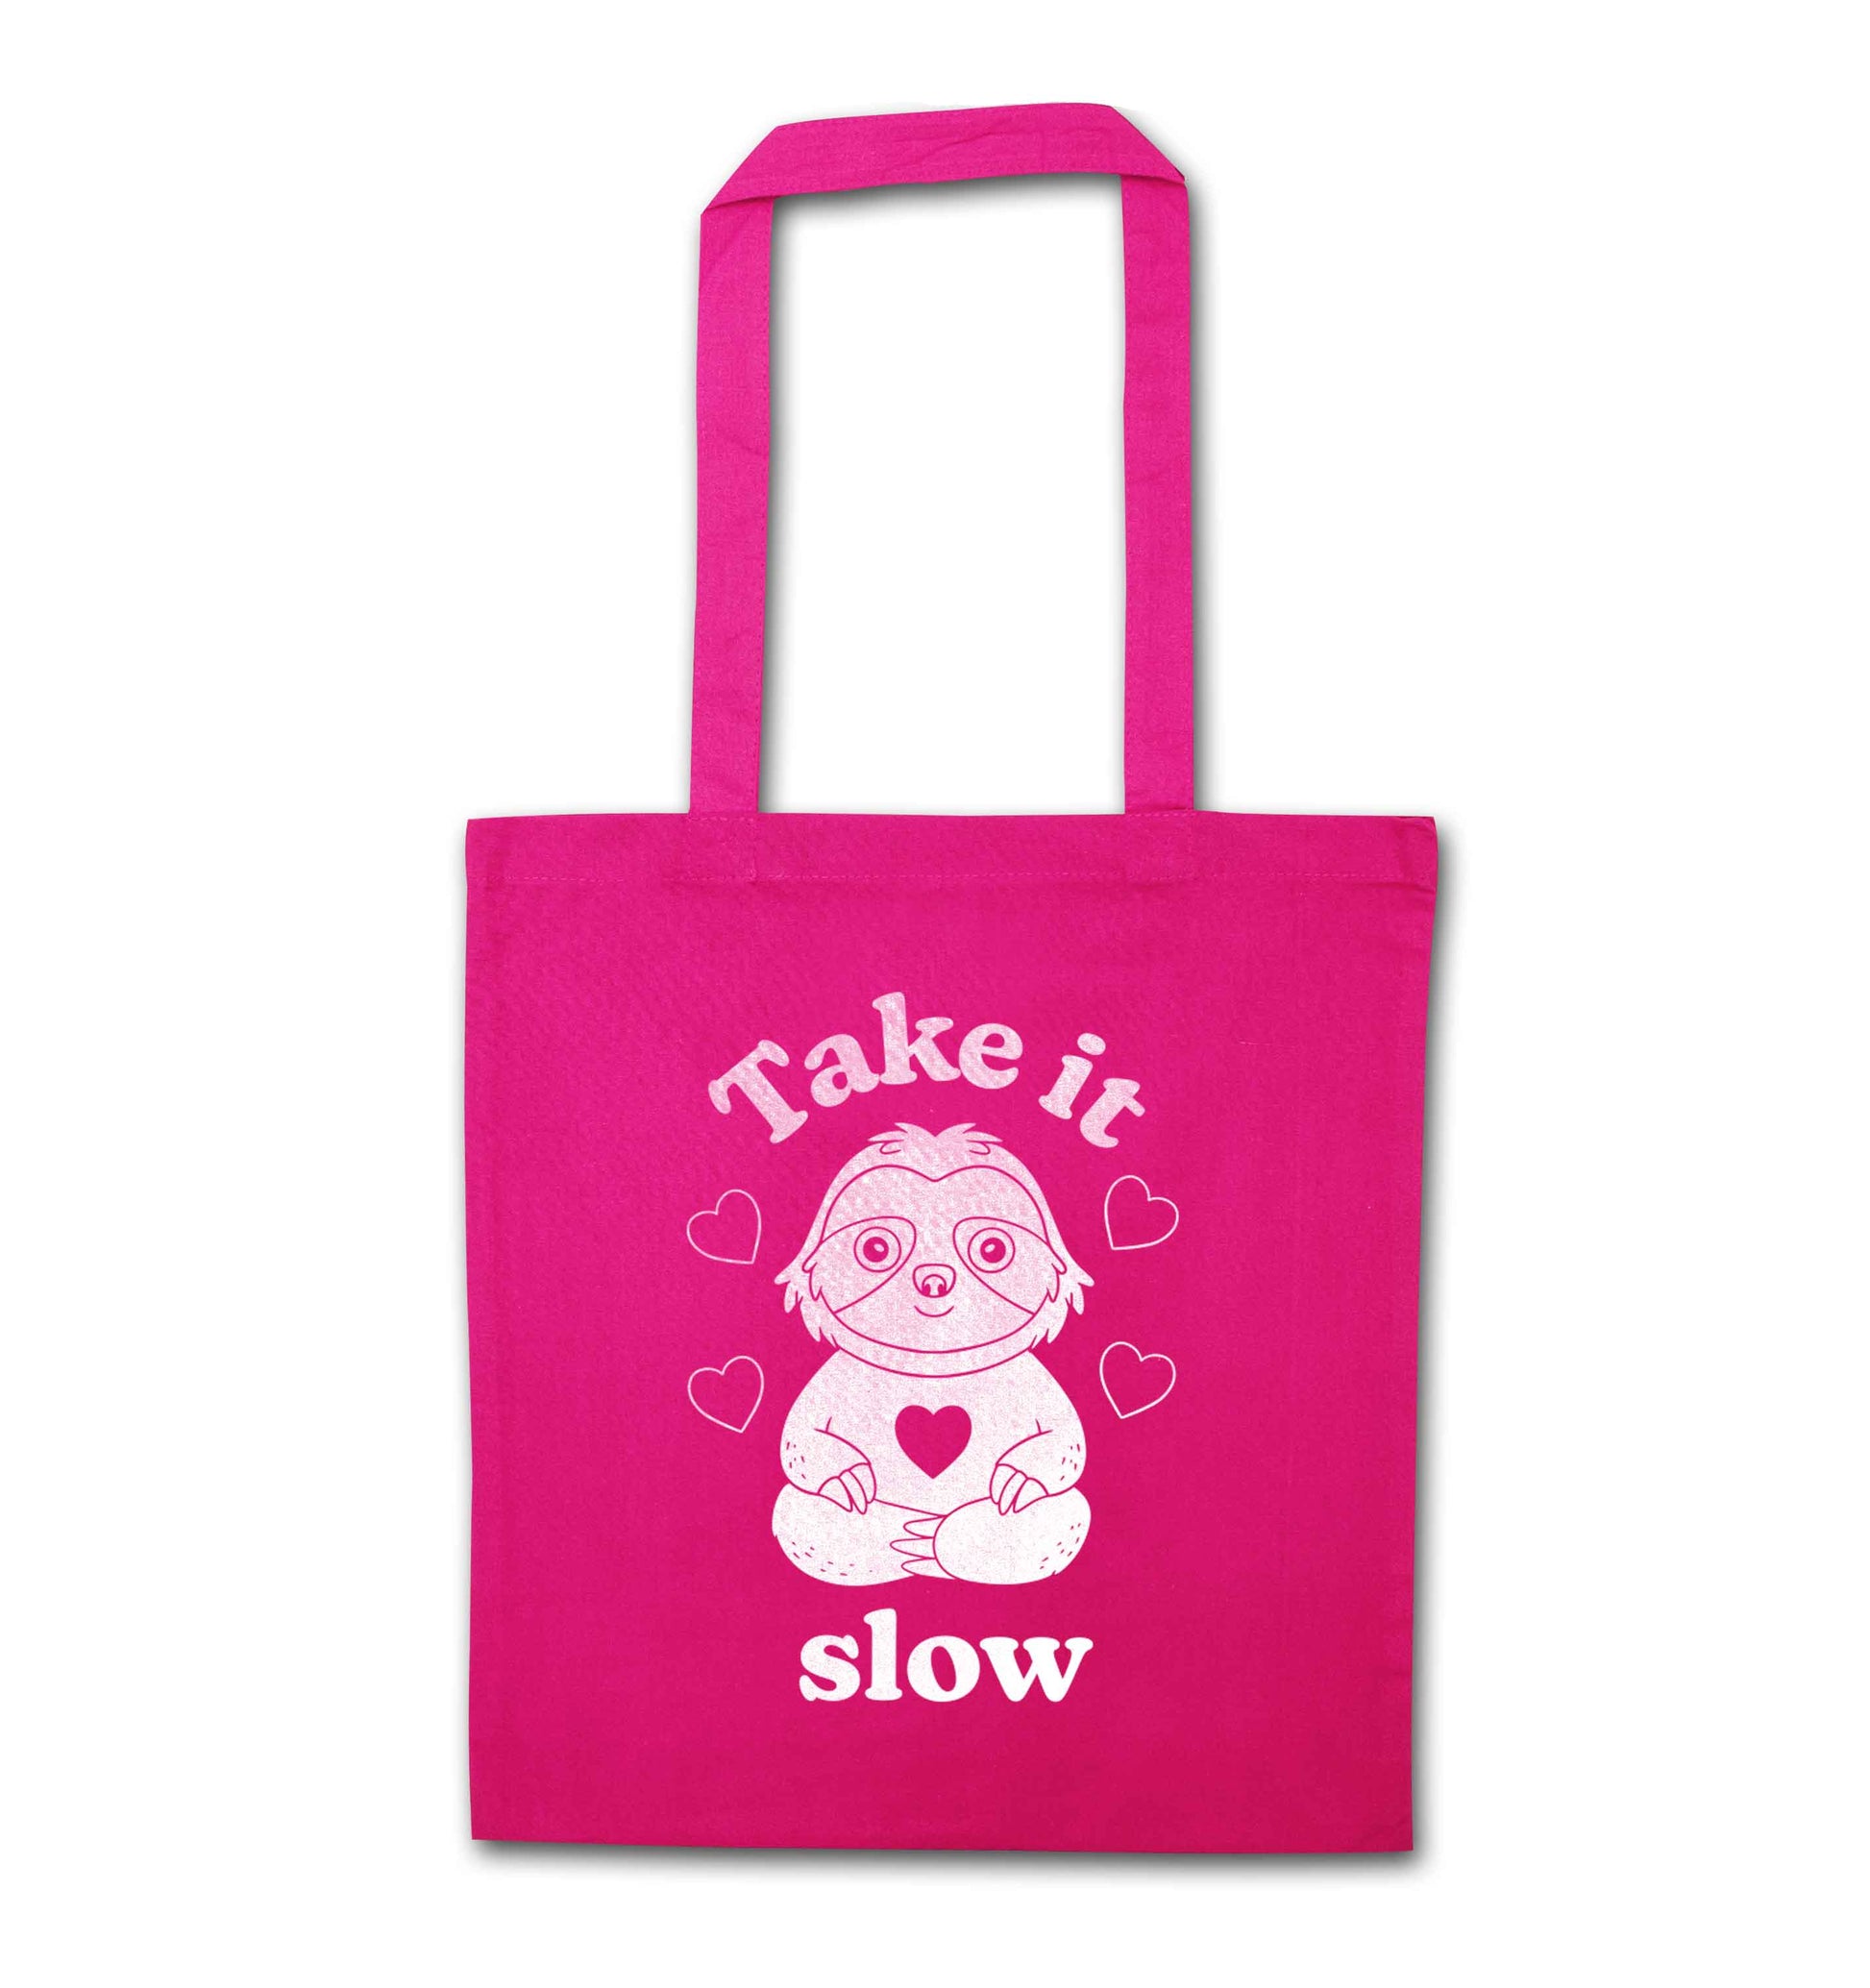 Take it slow pink tote bag